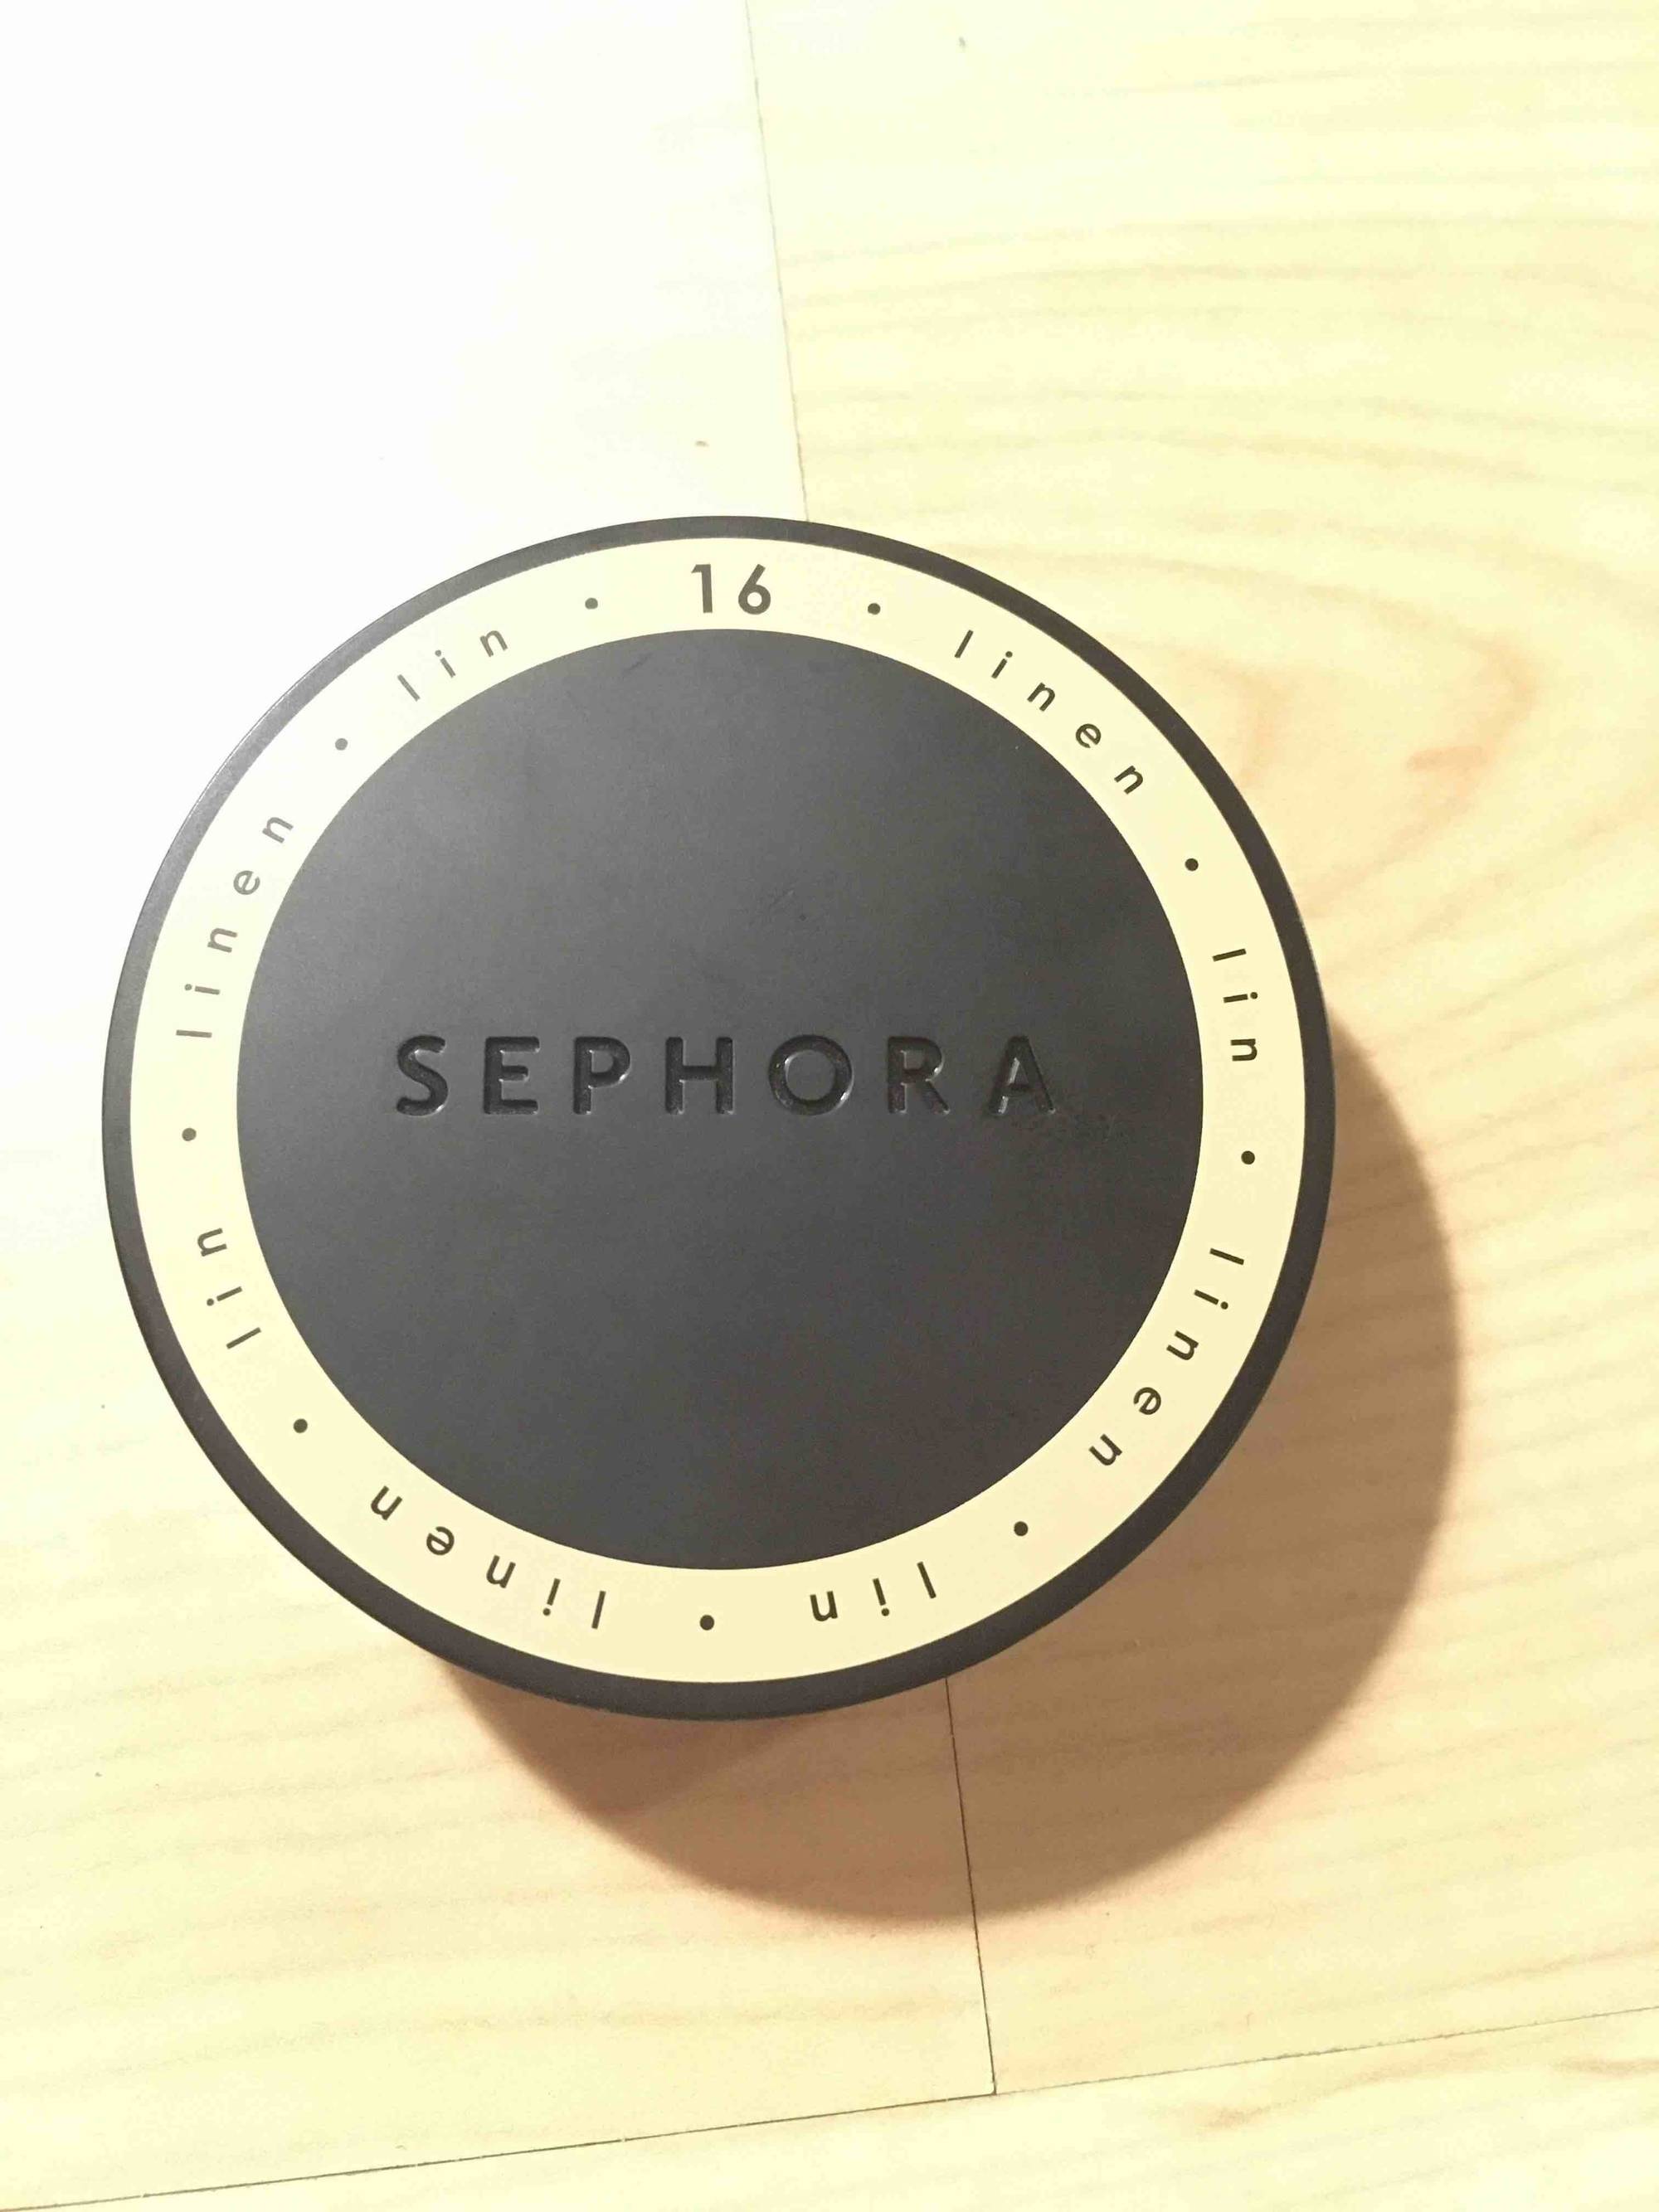 SEPHORA - Lin 16 - Fond de teint perfection compact matifiant